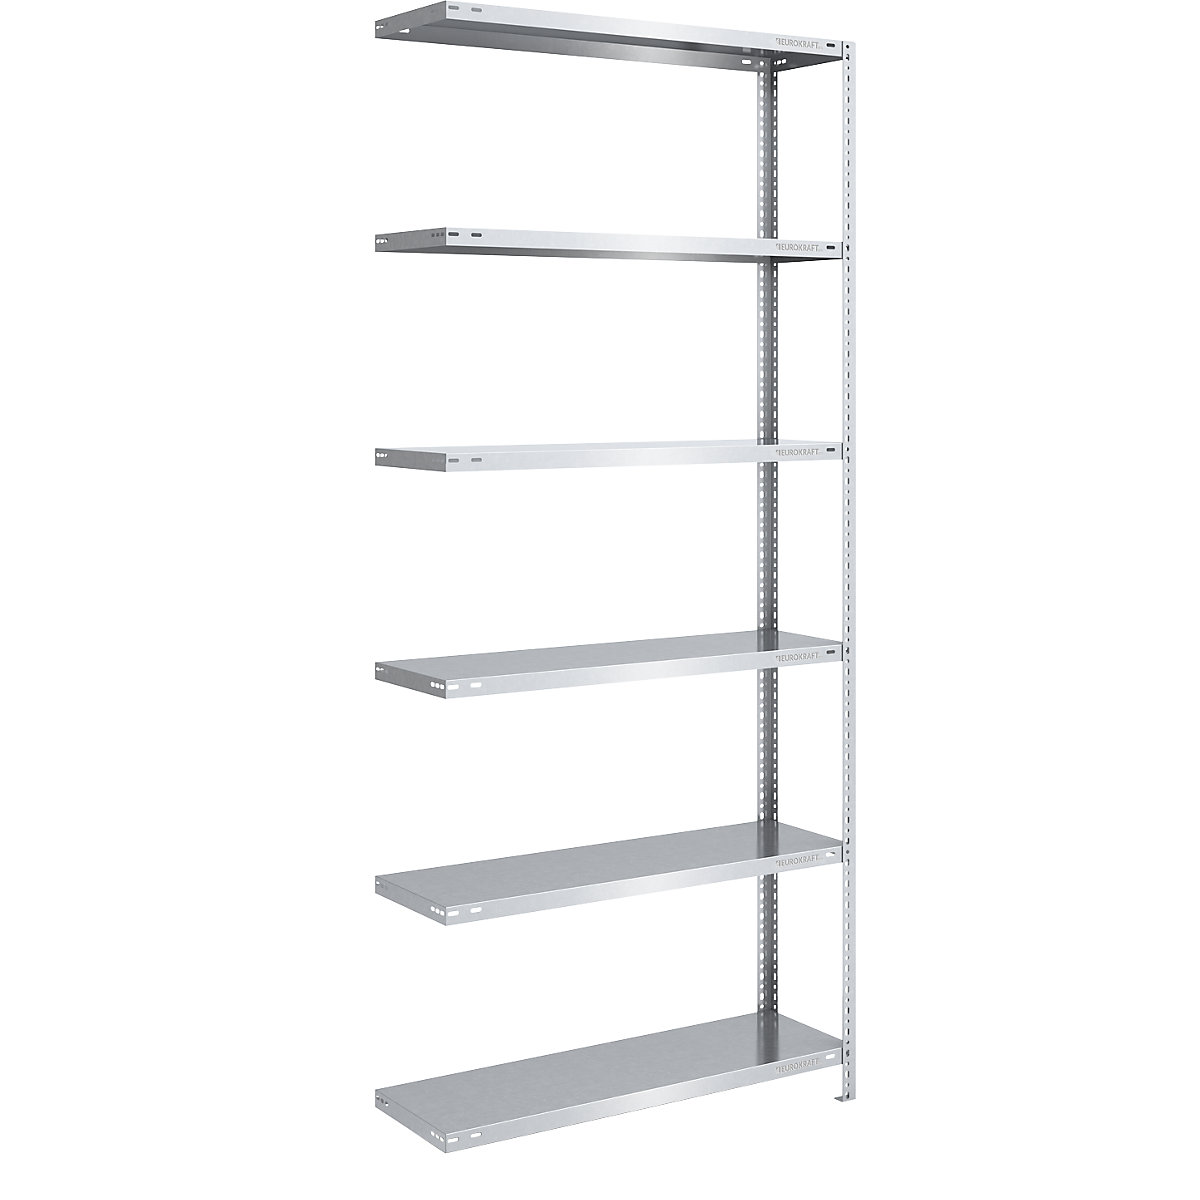 Bolt-together shelf unit, light duty, zinc plated – eurokraft pro, shelf unit height 2500 mm, shelf width 1000 mm, depth 400 mm, extension shelf unit-5